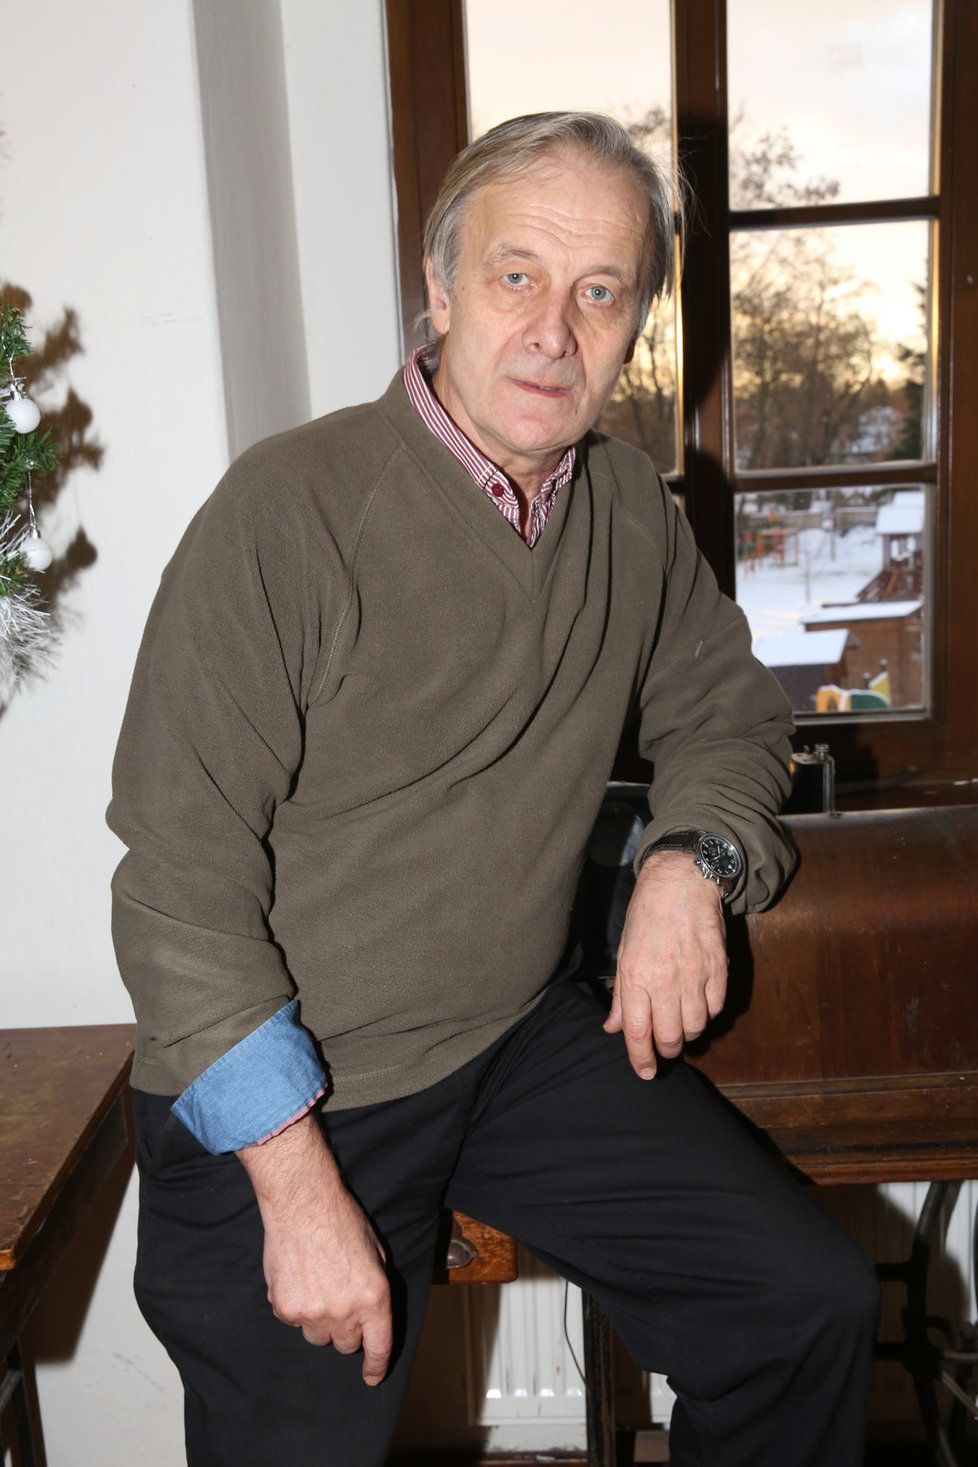 Jan Novotný